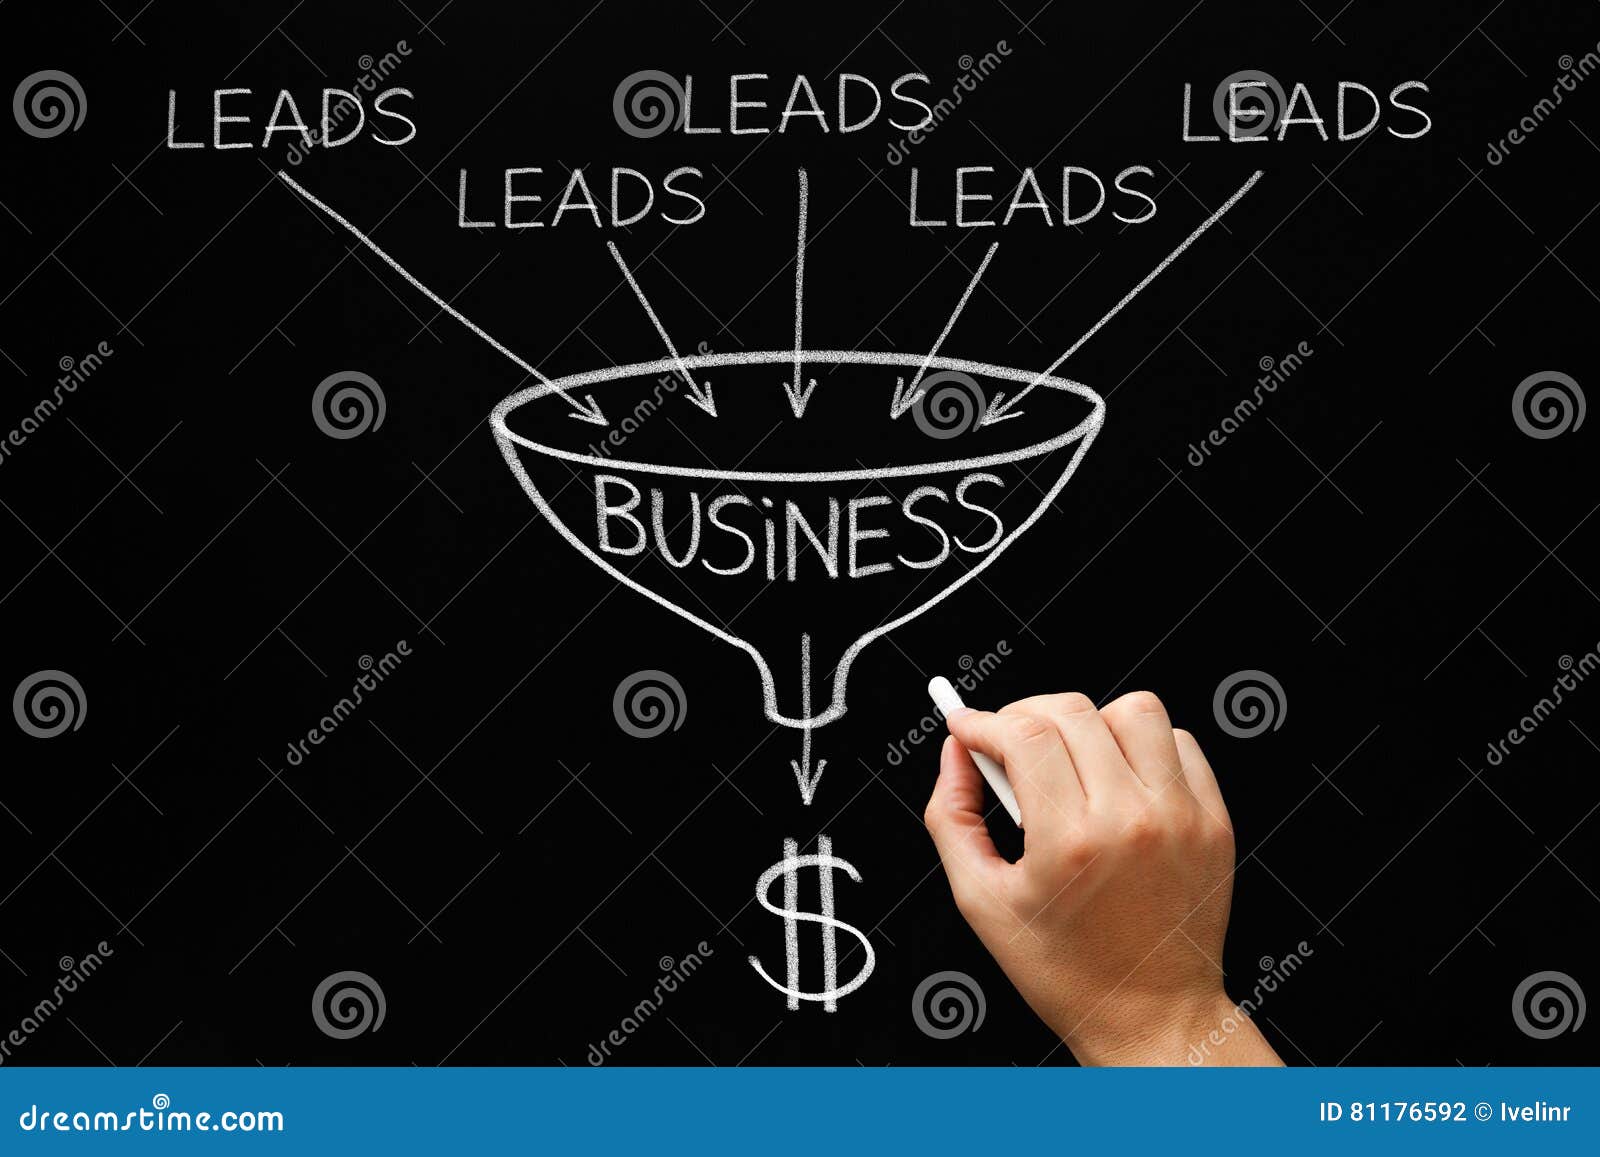 lead generation business funnel concept